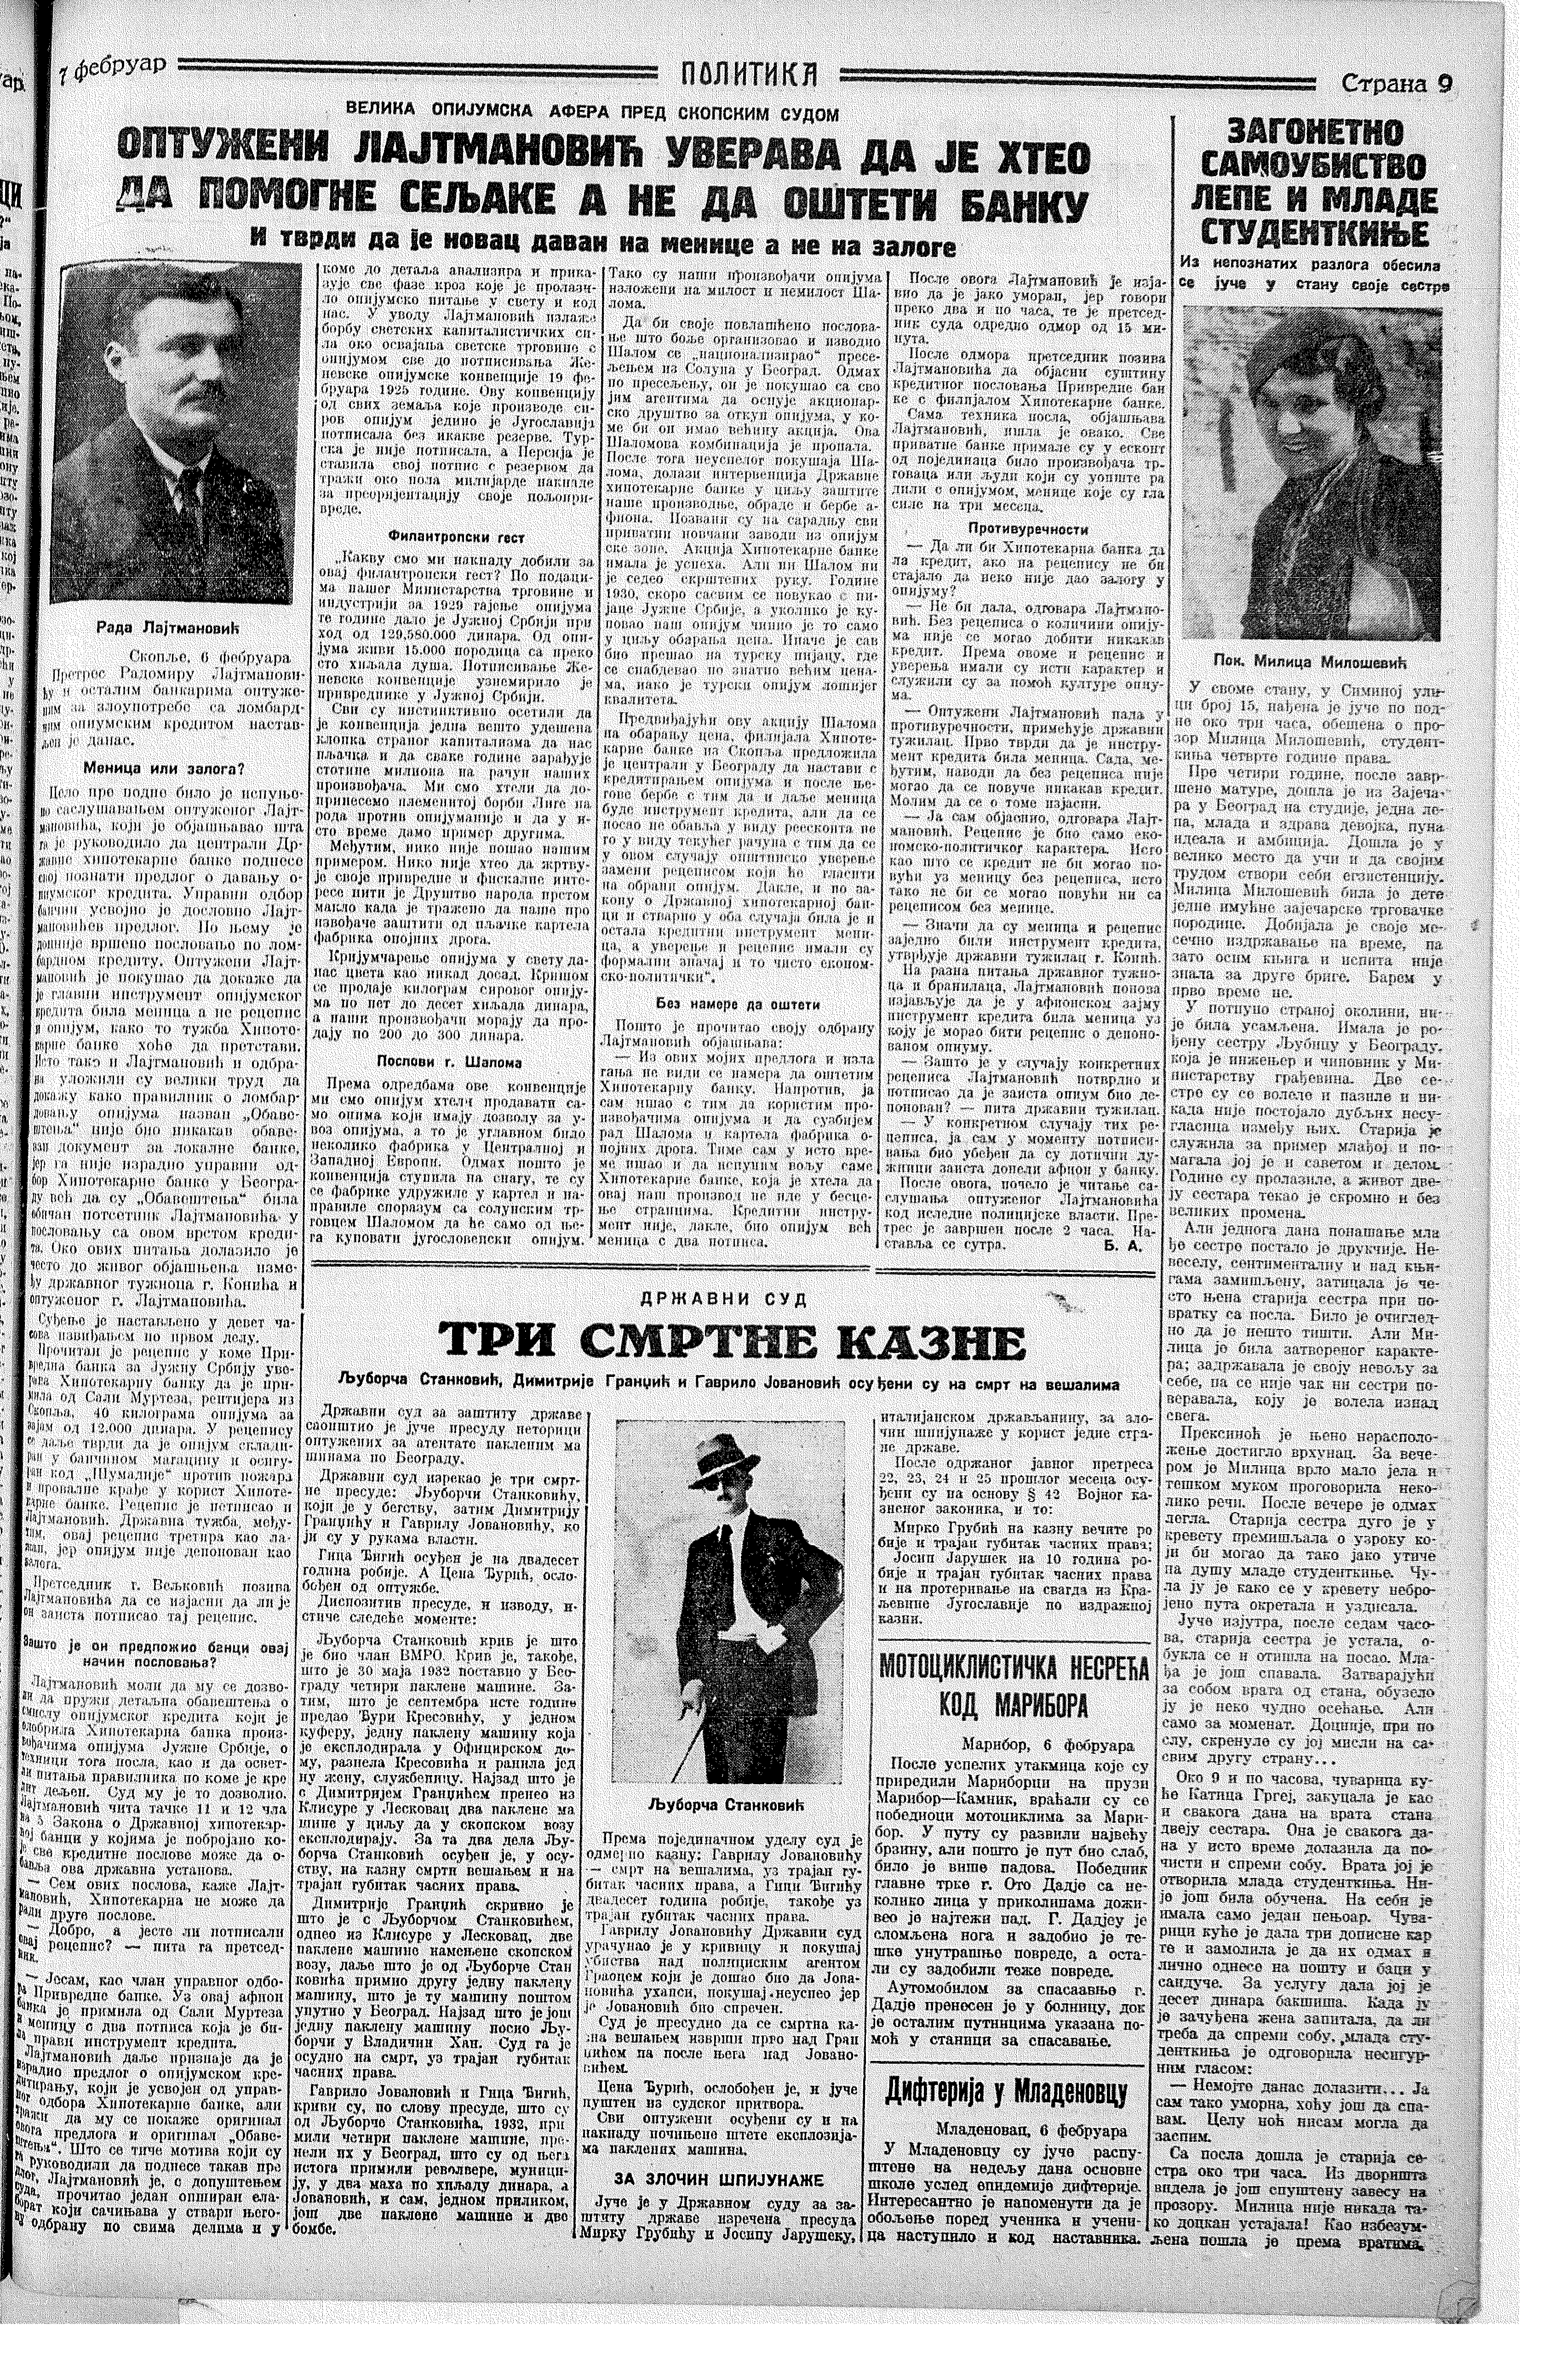 Tri smrtne kazne, Politika, 07.02.1934.